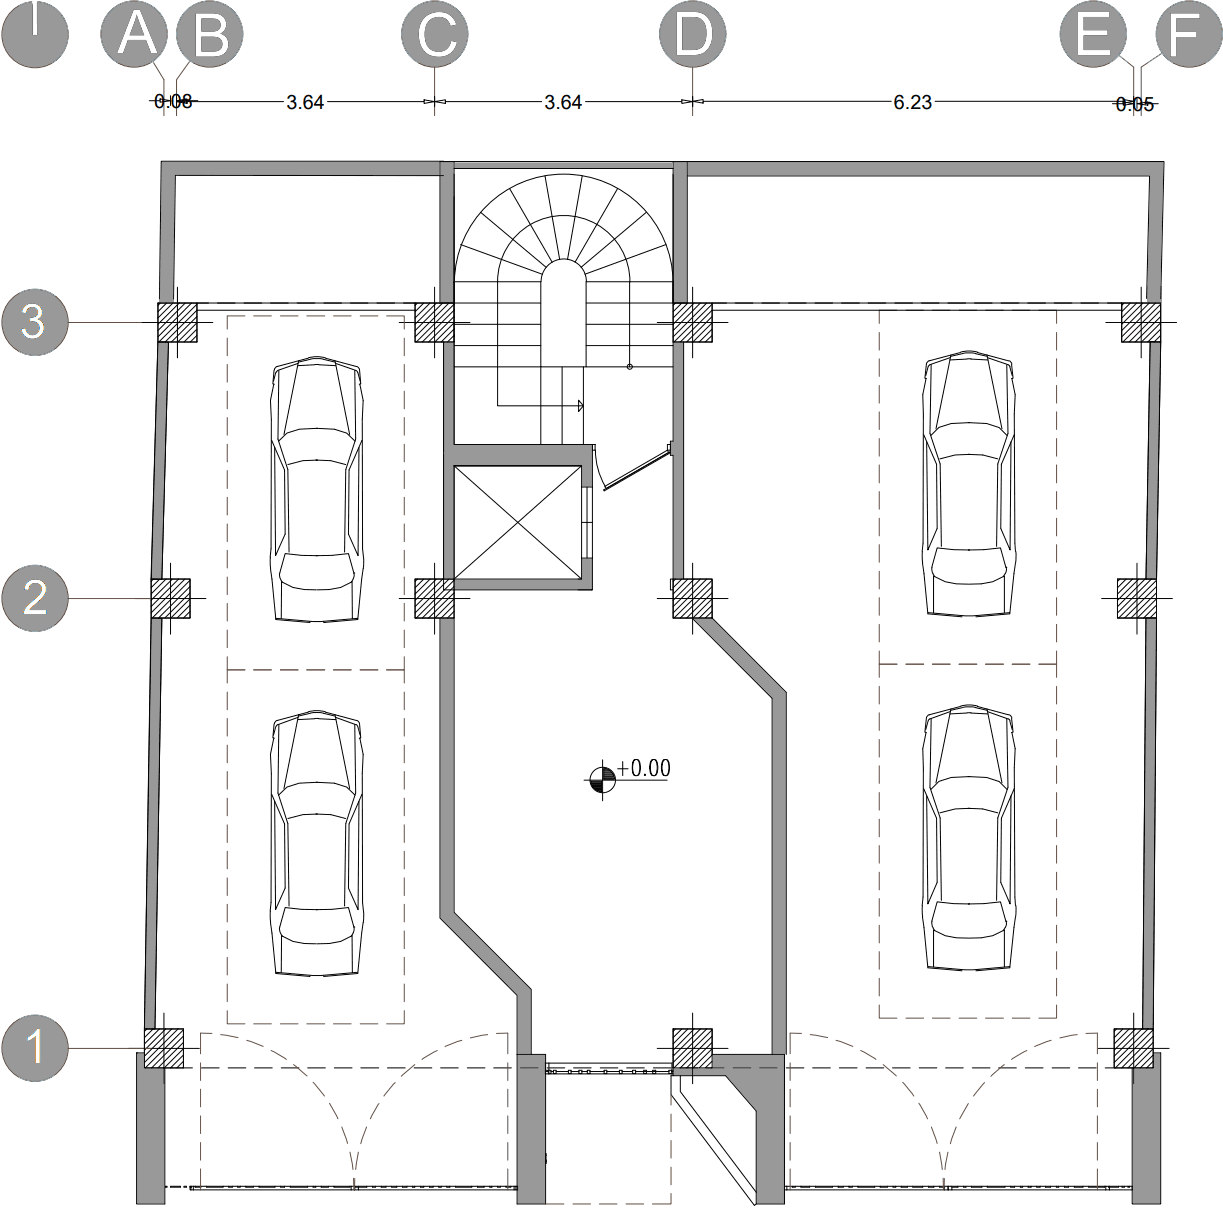 ground floor plan, an apartment in lahijan